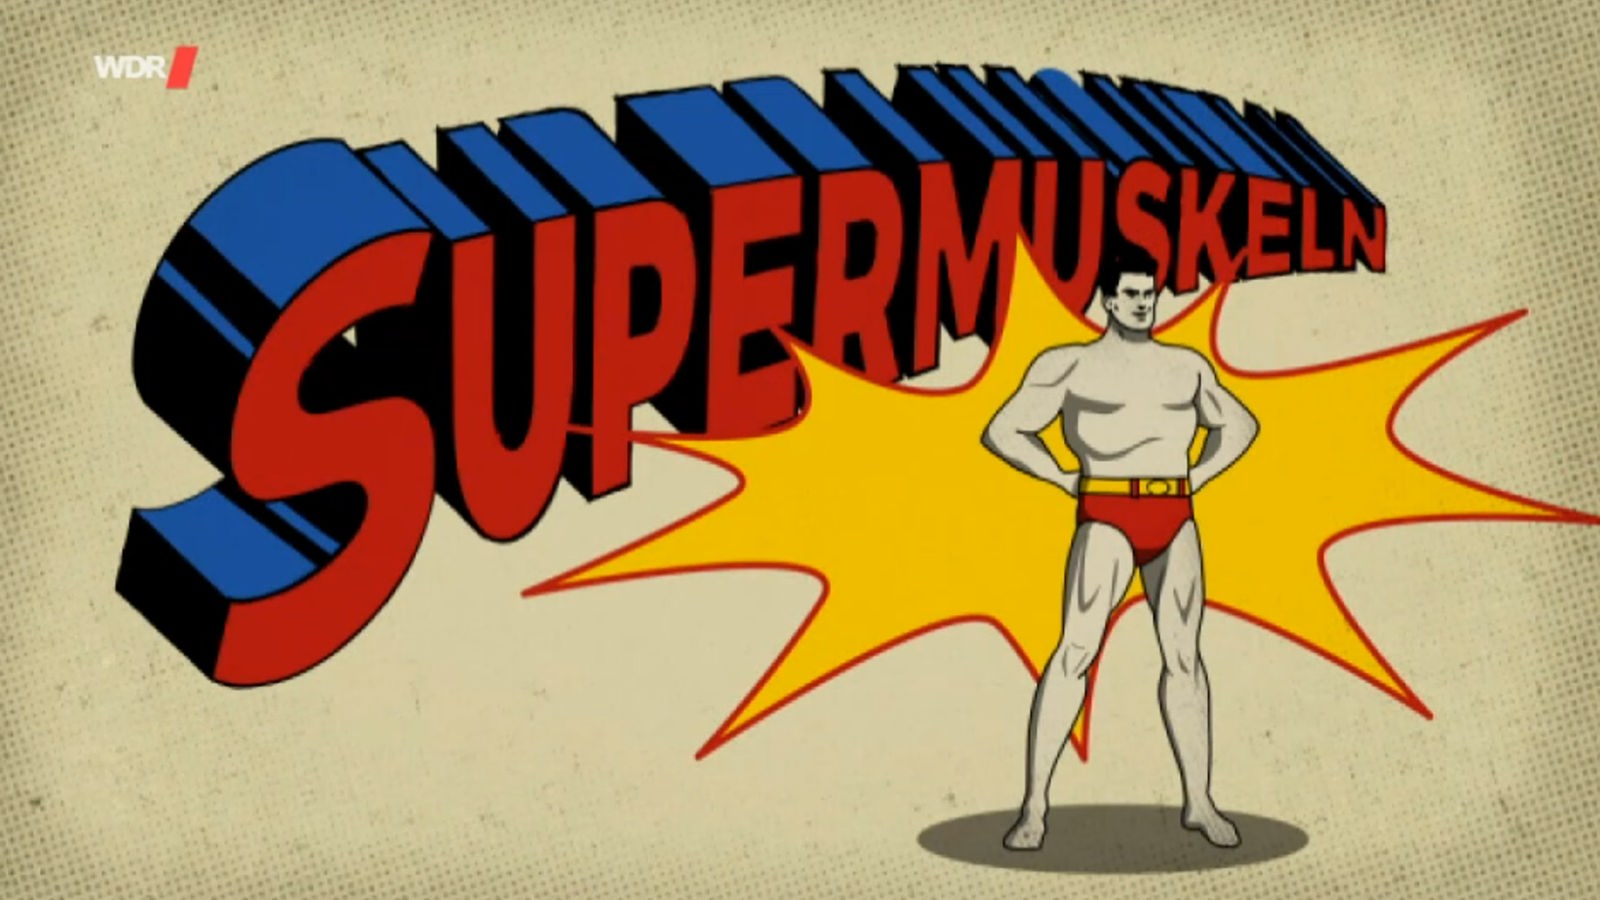 Grafik: Comic-Superman mit Schriftzug "Supermuskeln"